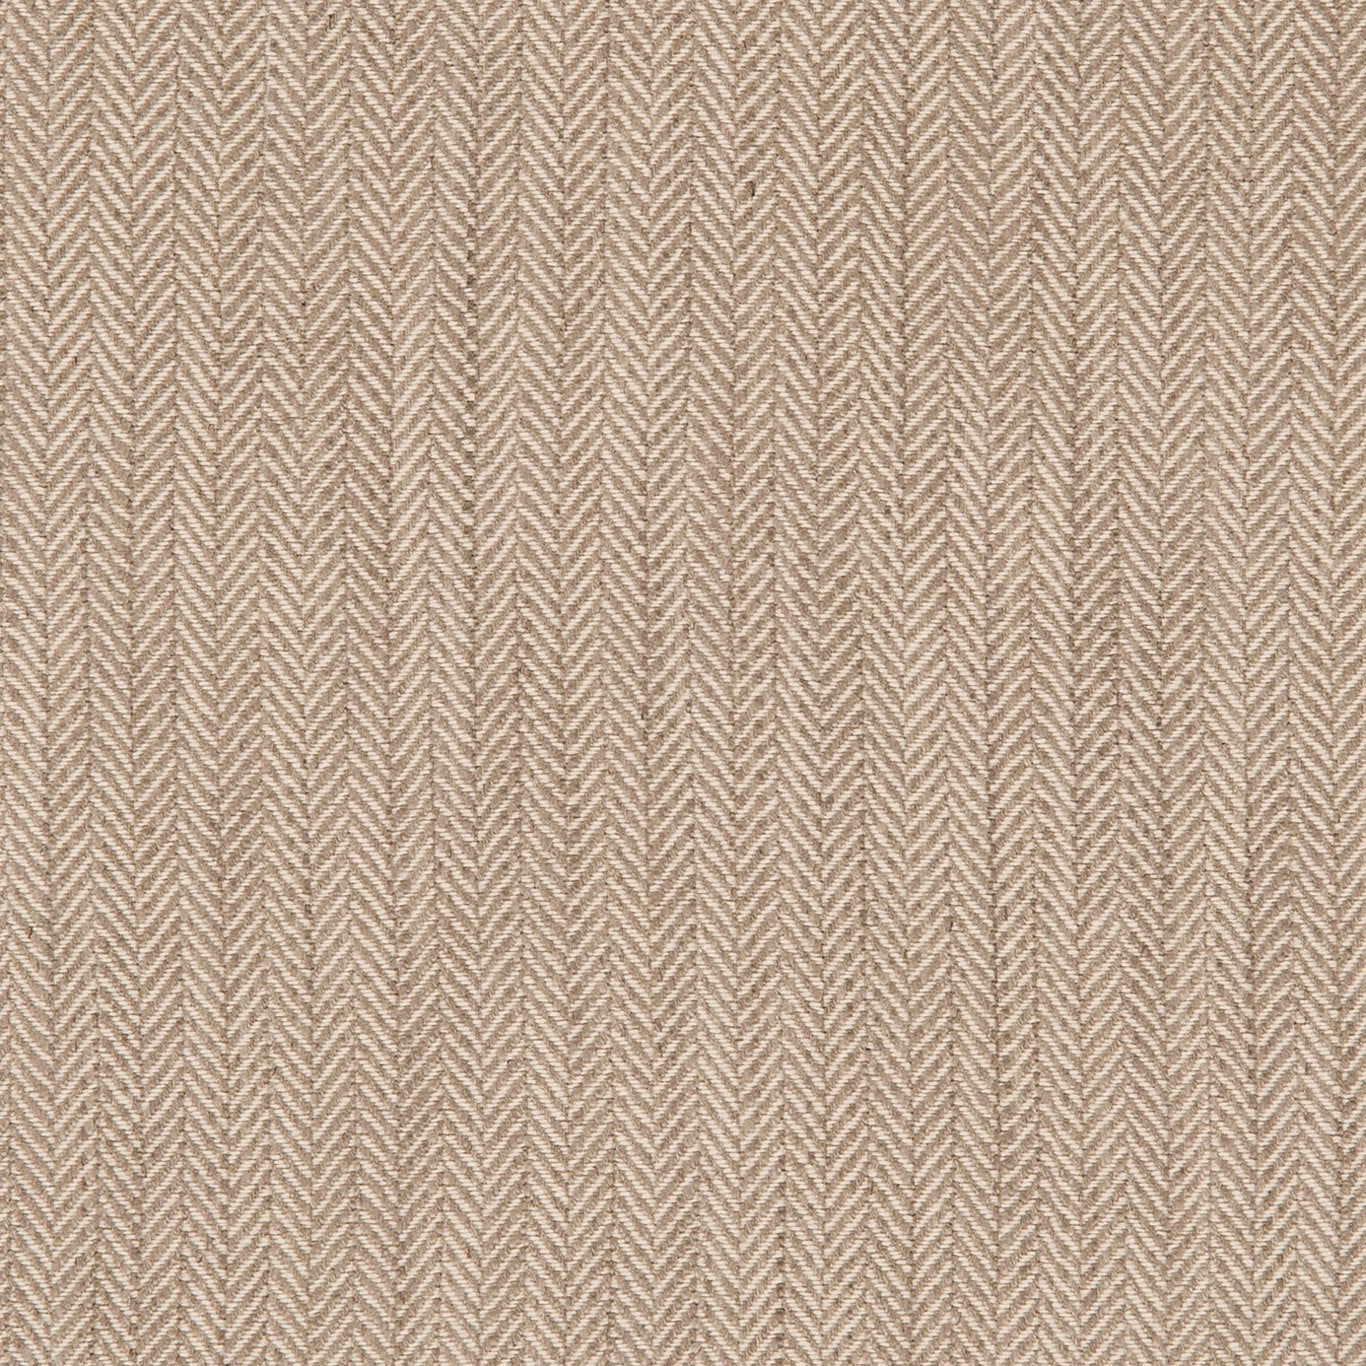 Argyle Fabric by Clarke & Clarke - F0582/05 - Taupe